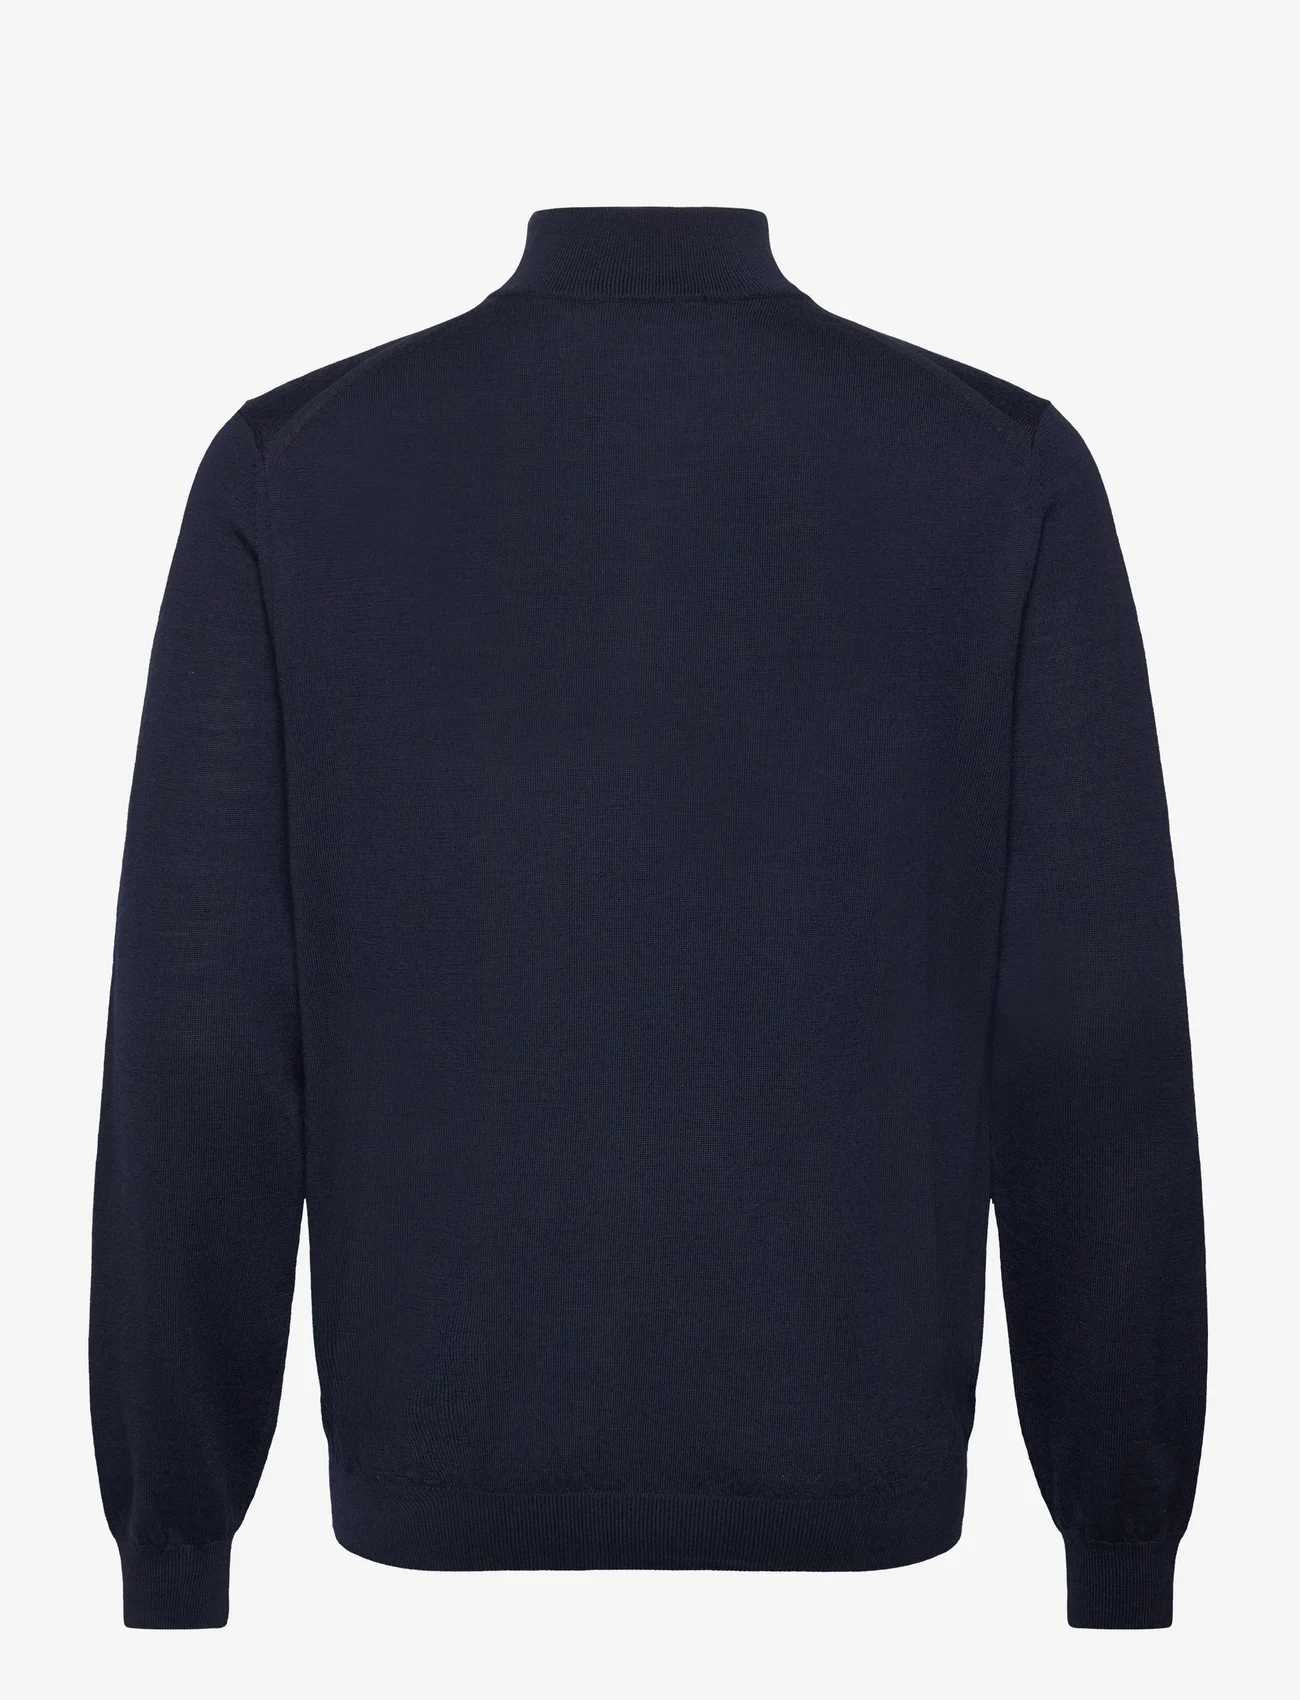 Mango - 100% merino wool sweater with zip collar - miesten - navy - 1